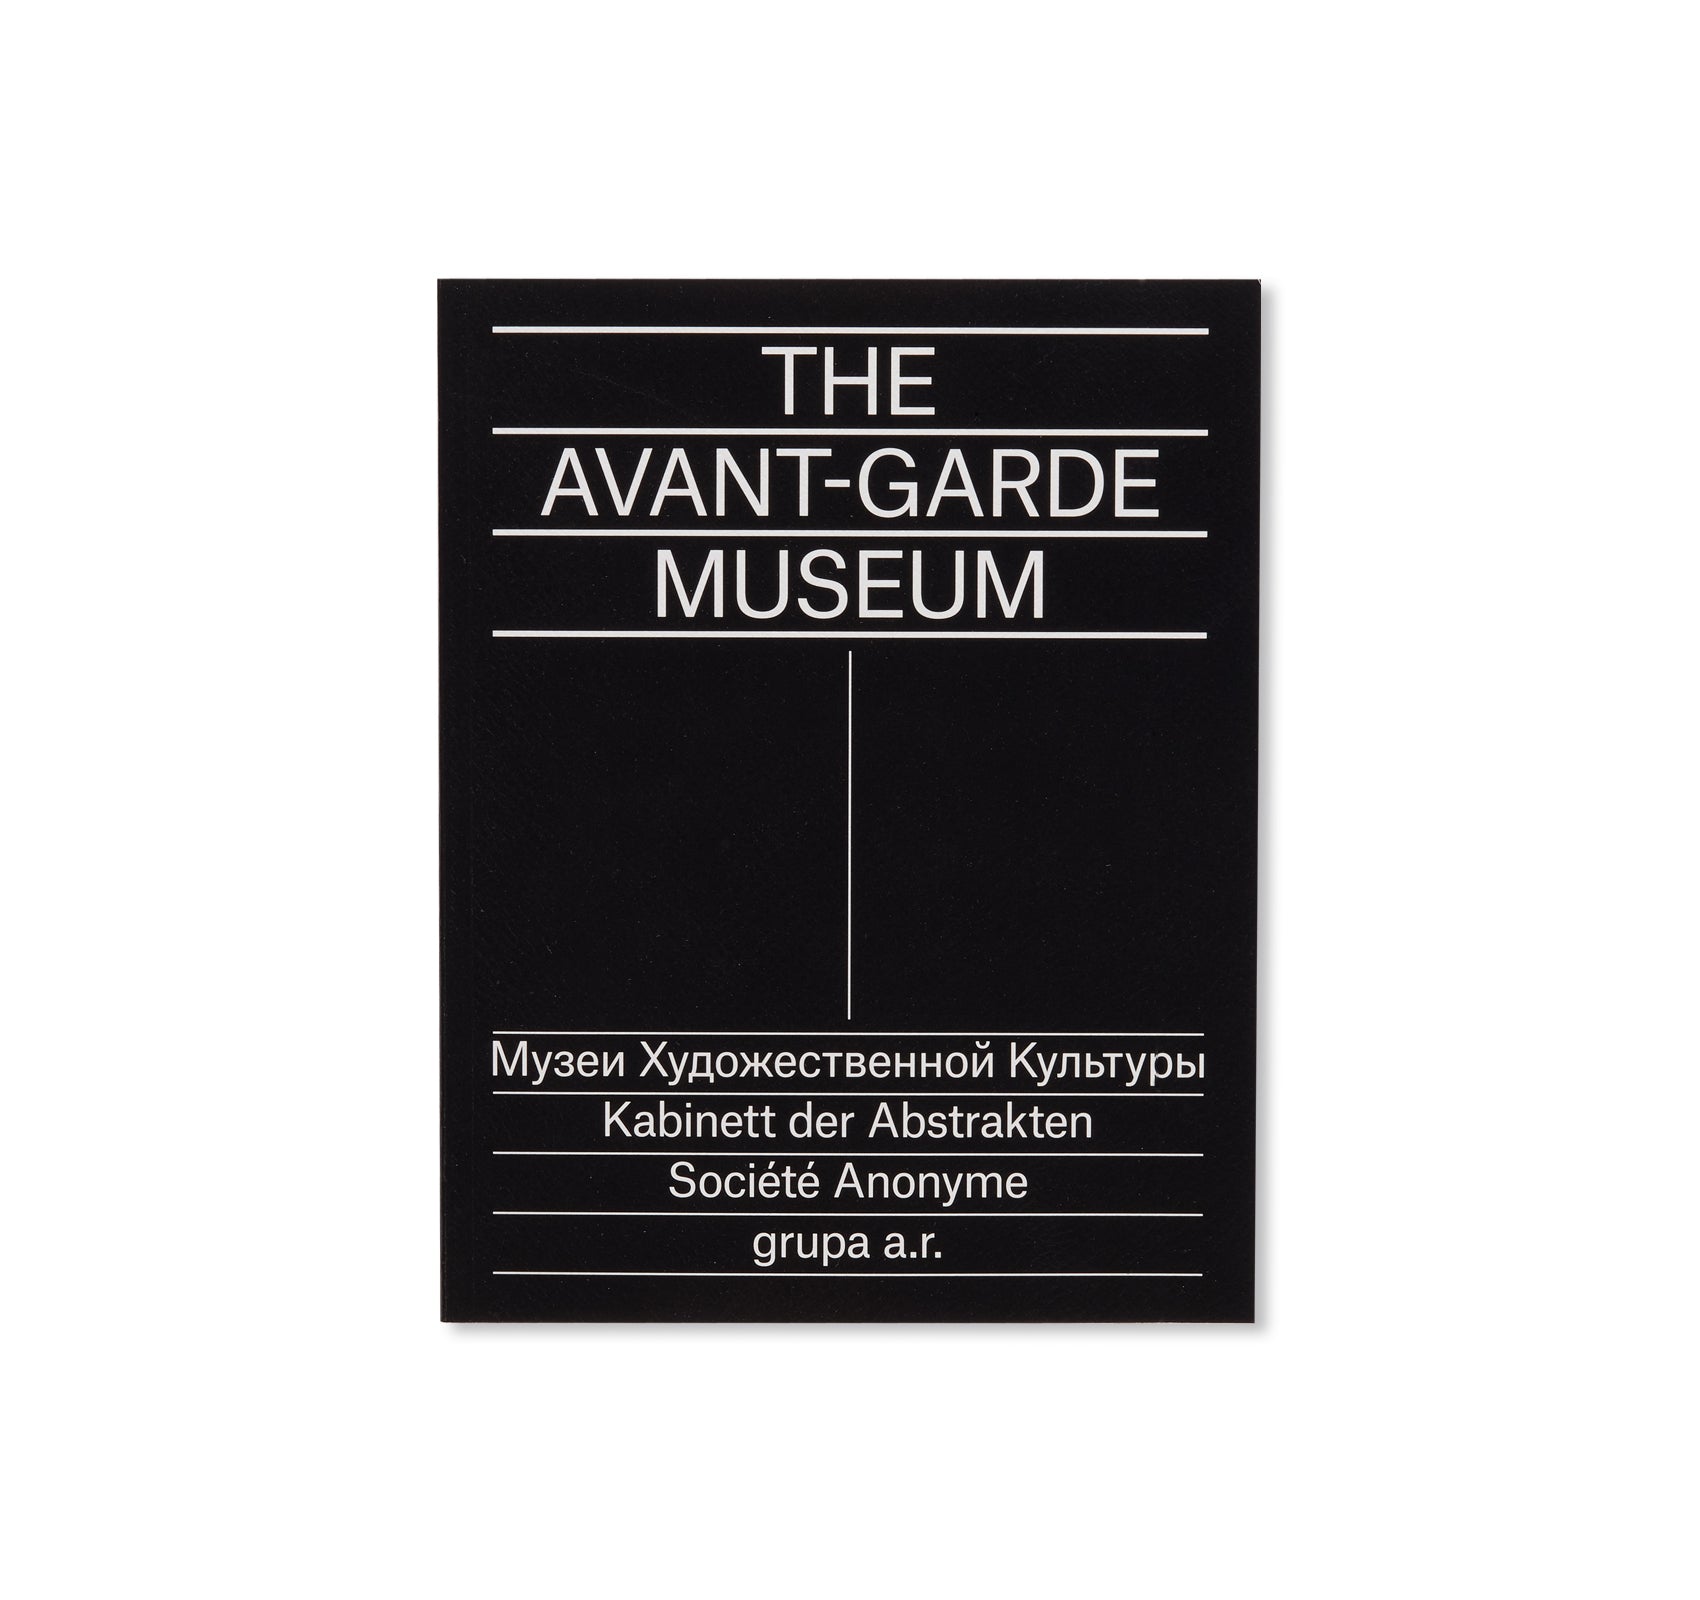 THE AVANT-GARDE MUSEUM